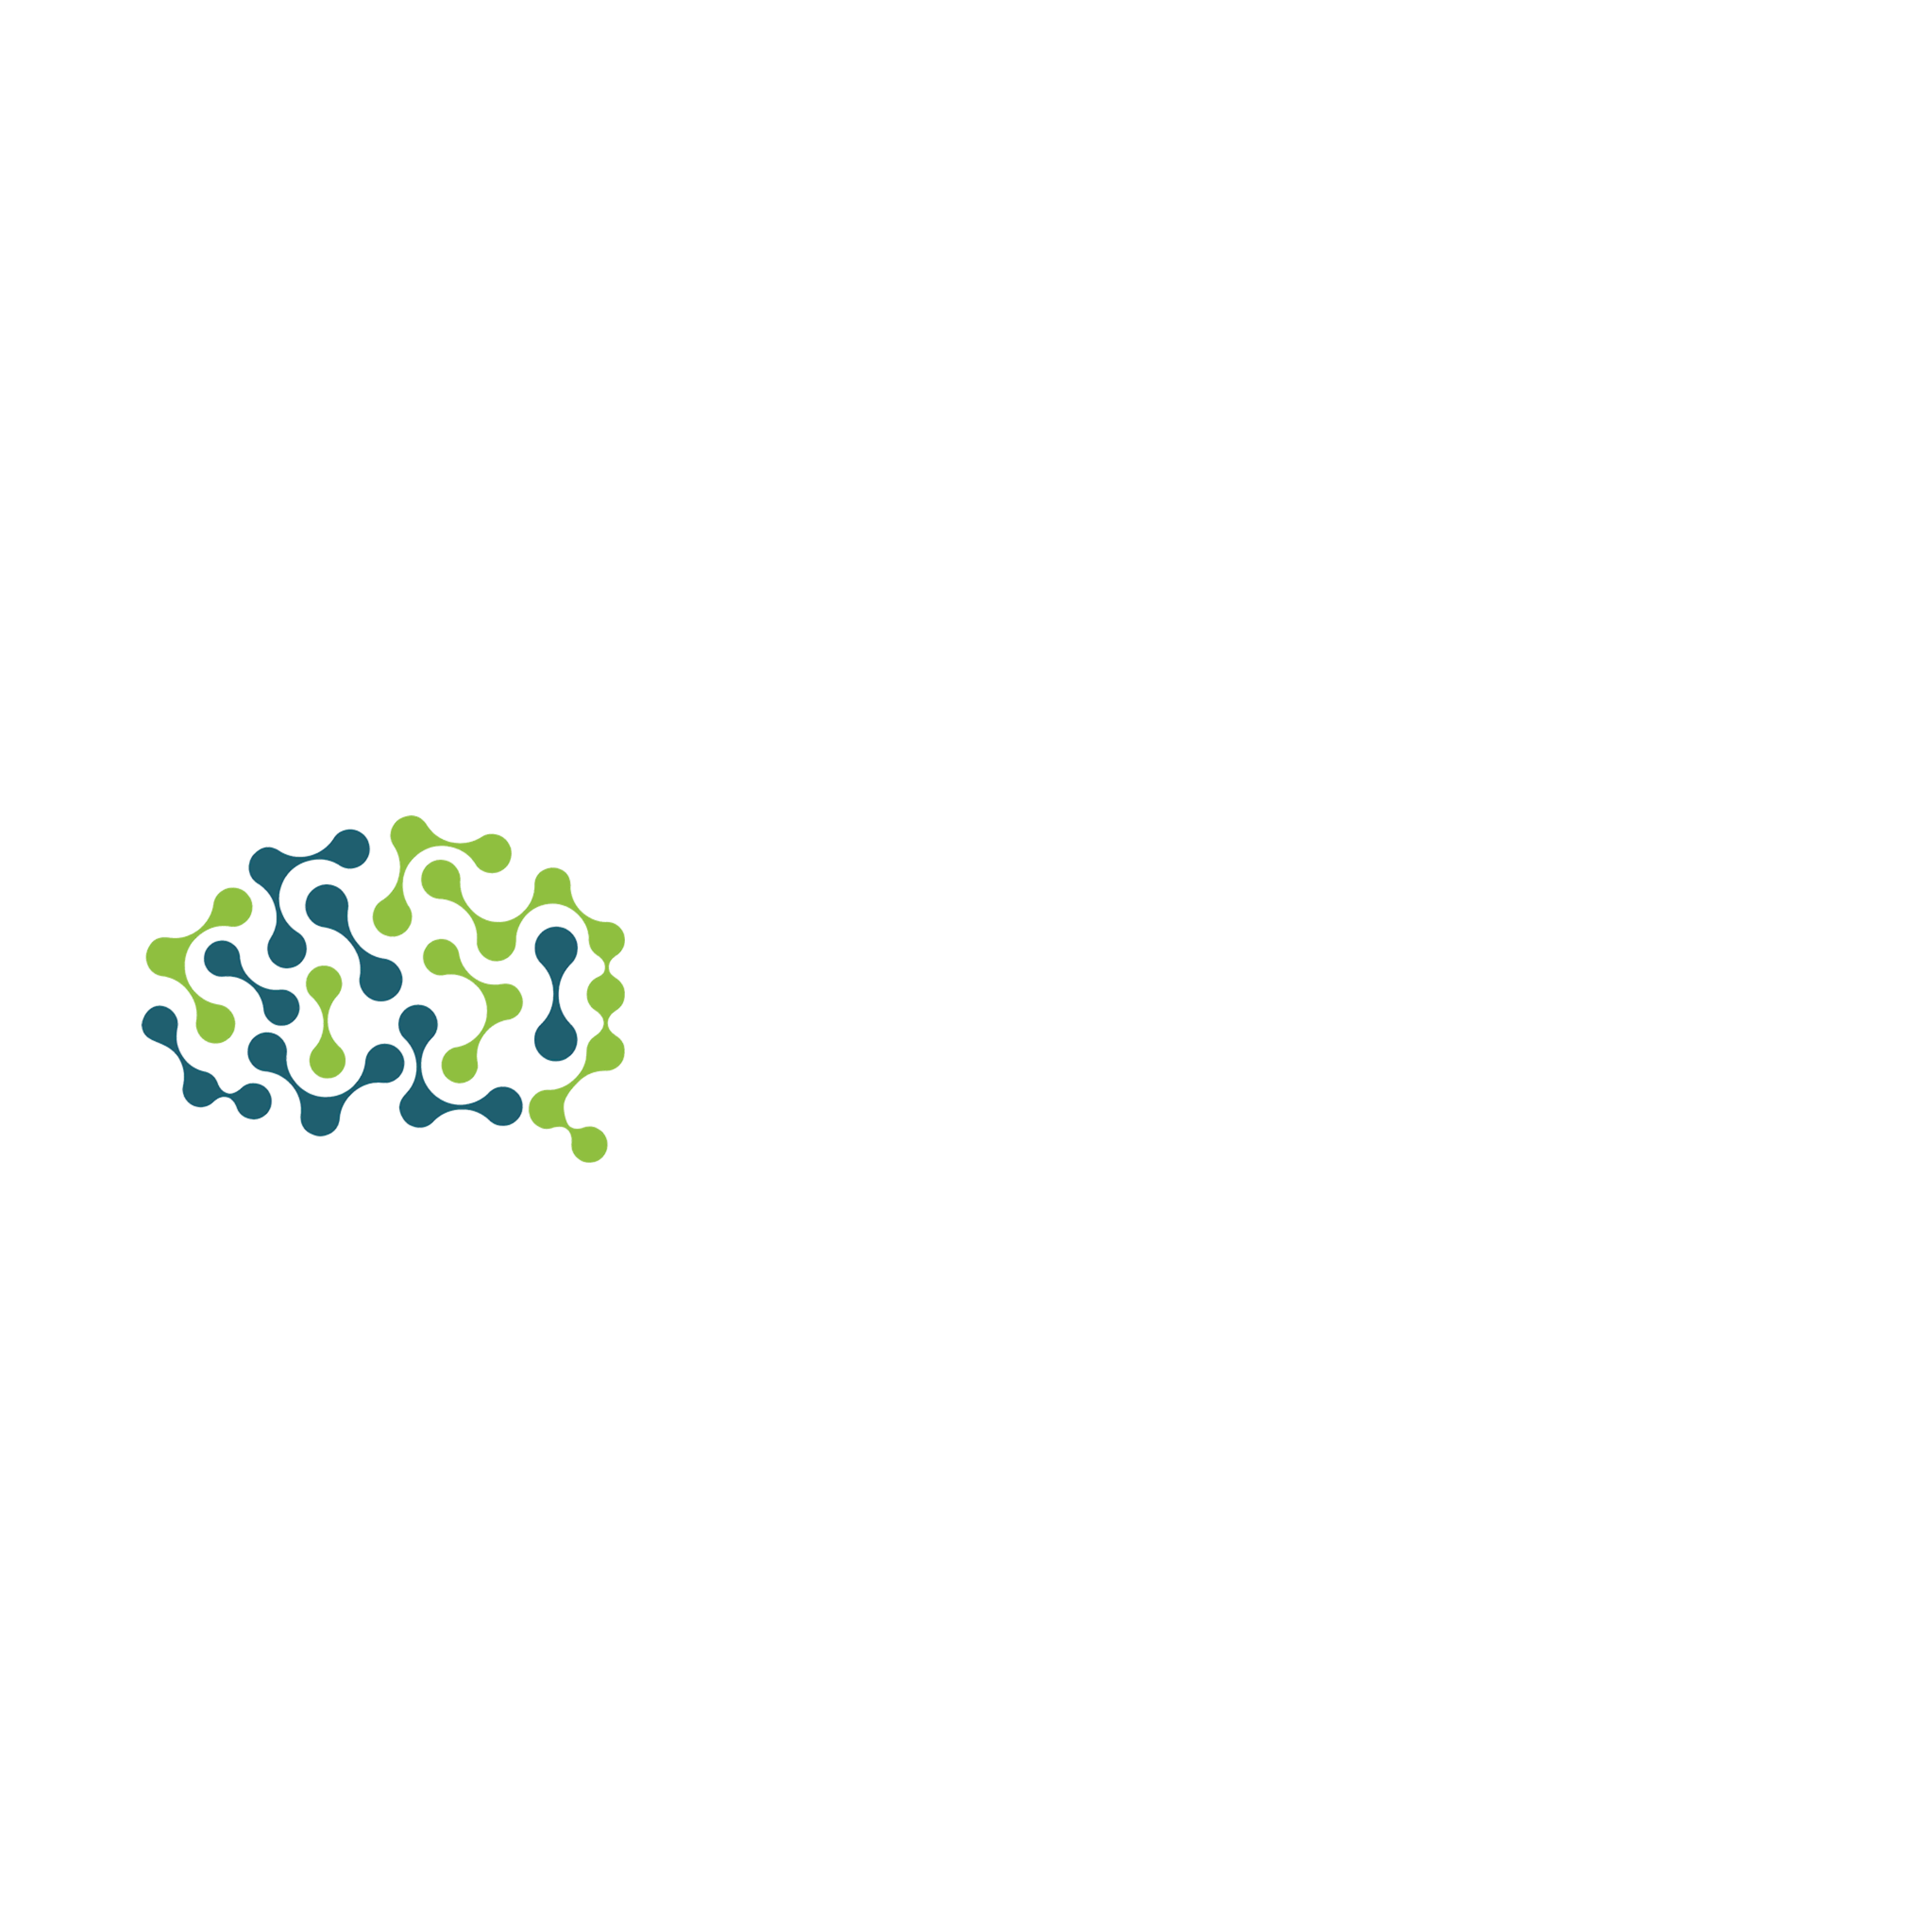 erfanzare logo